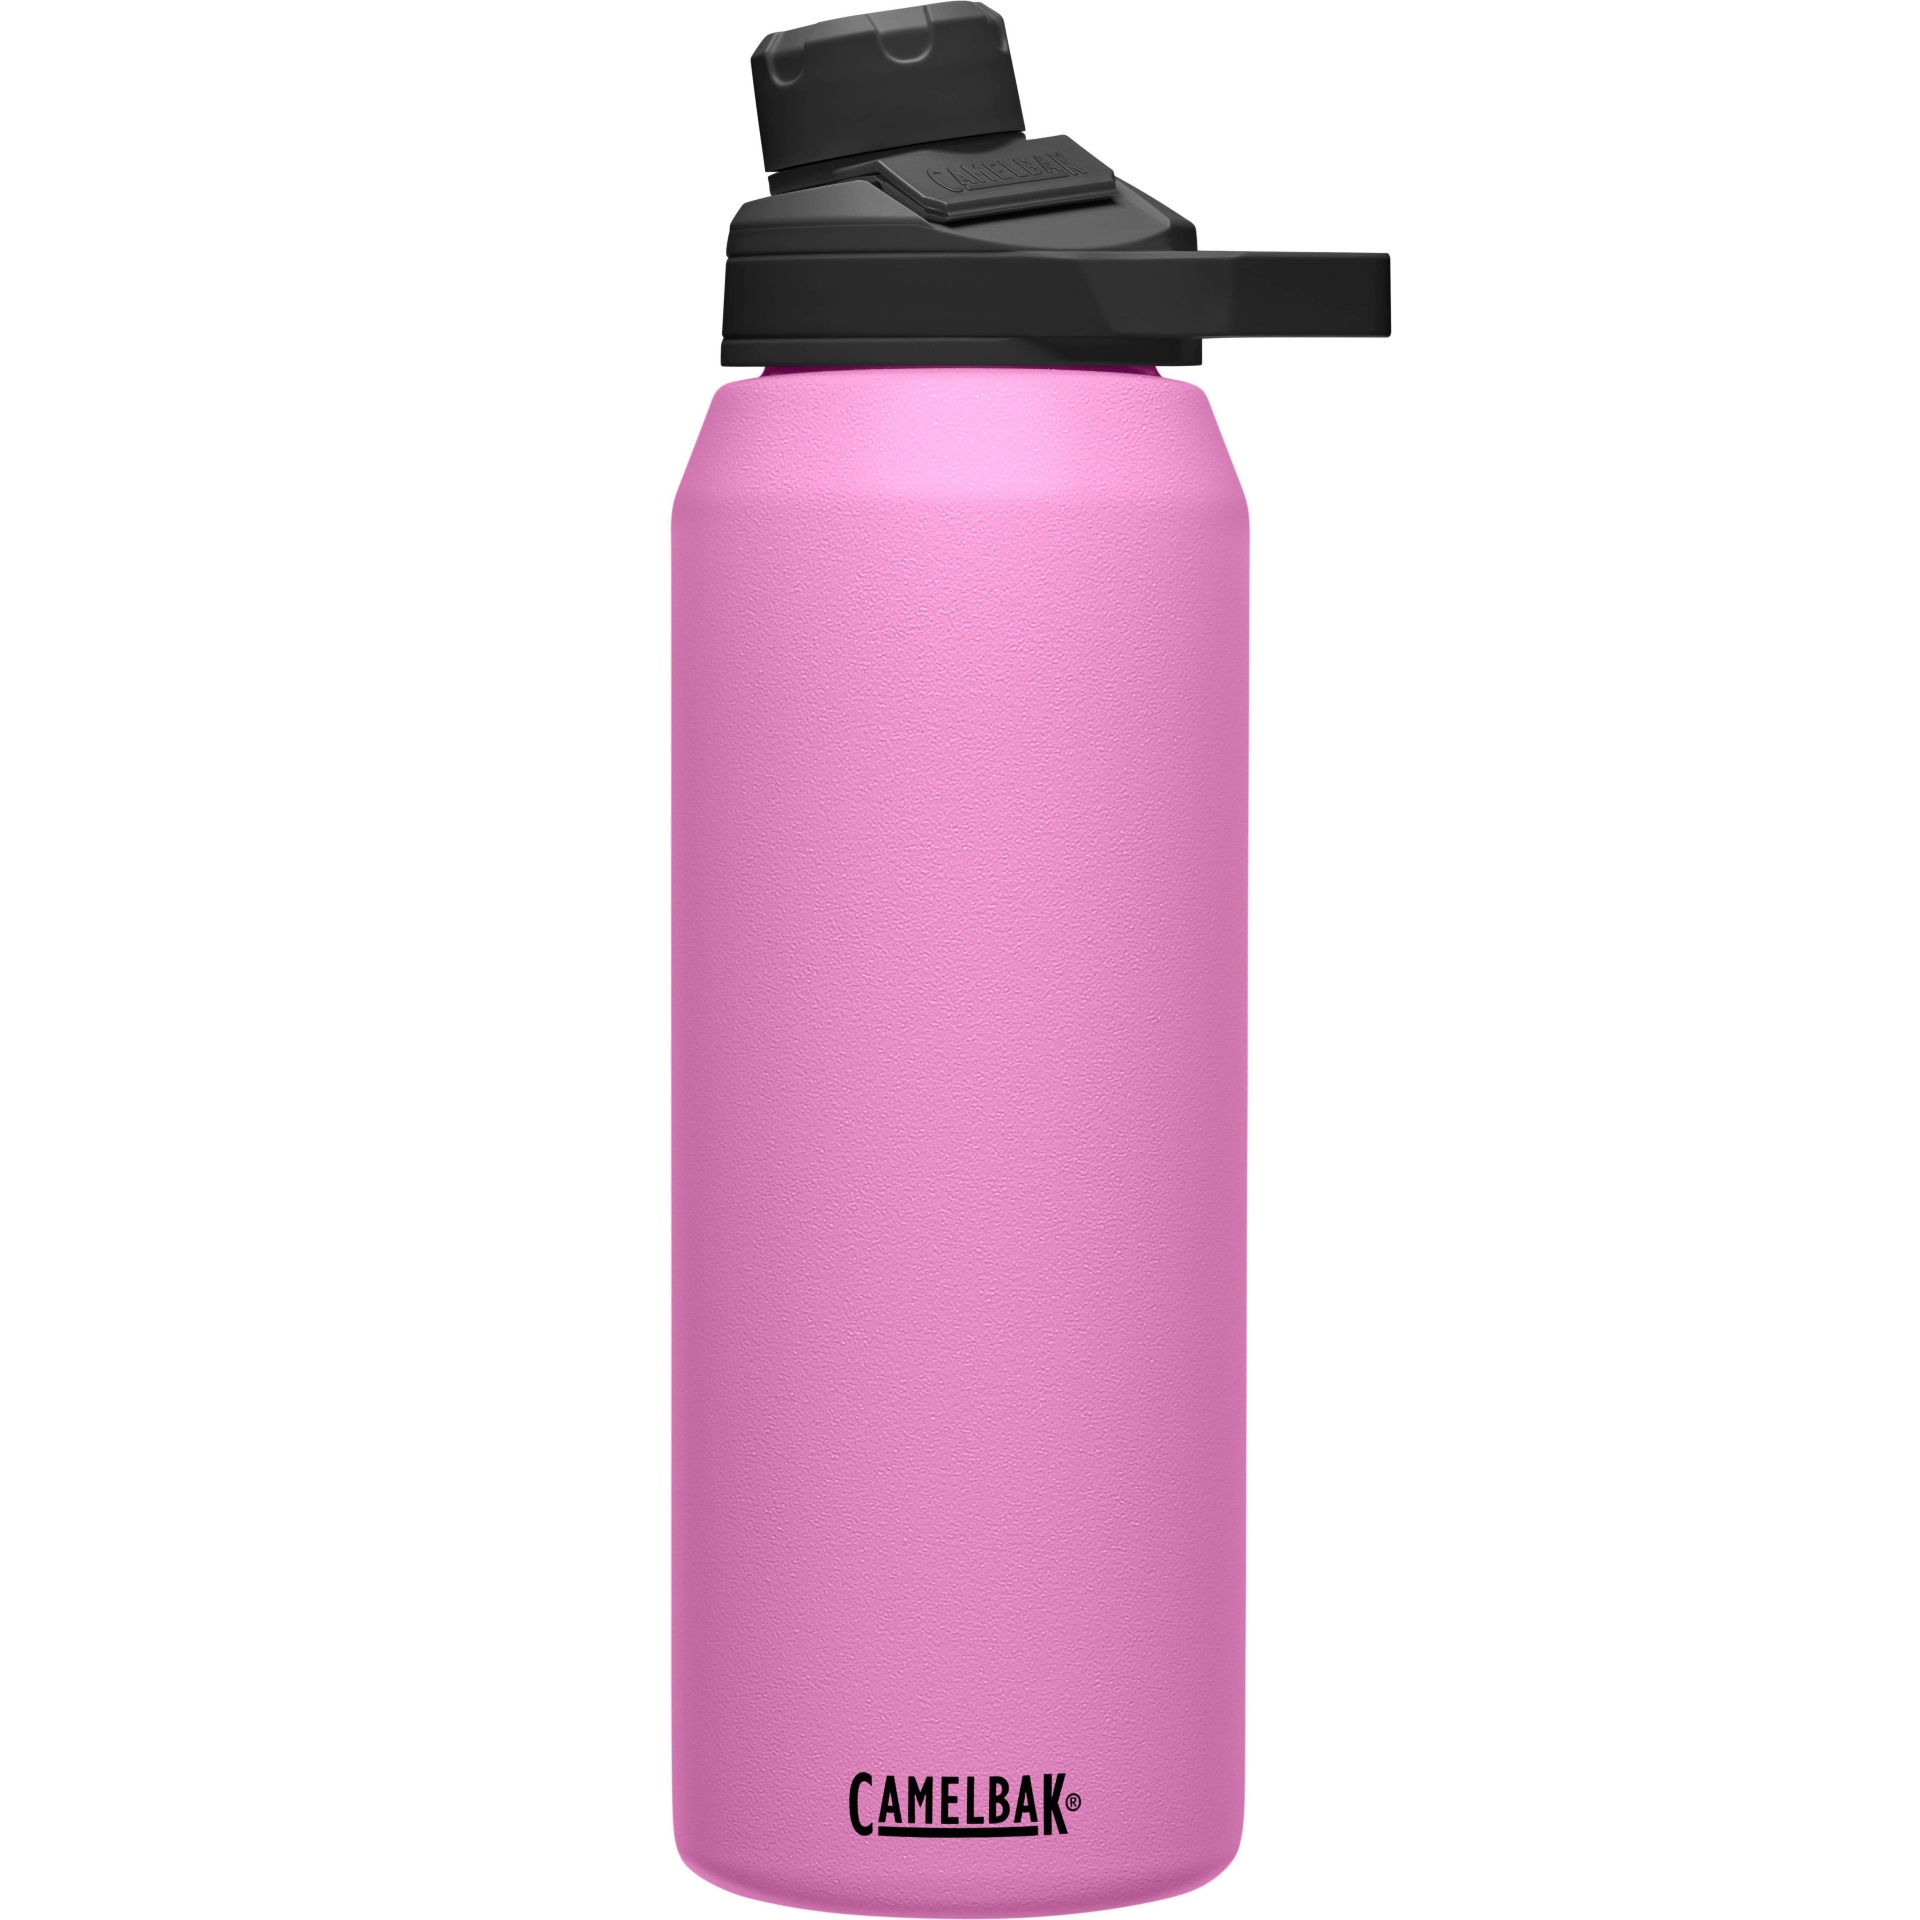 CamelBak Chute Mag Vacuum Insulated Stainless Steel Water Bottle - Pink Camelbak Chute Mag Water Bottle Insulated Stainless Steel